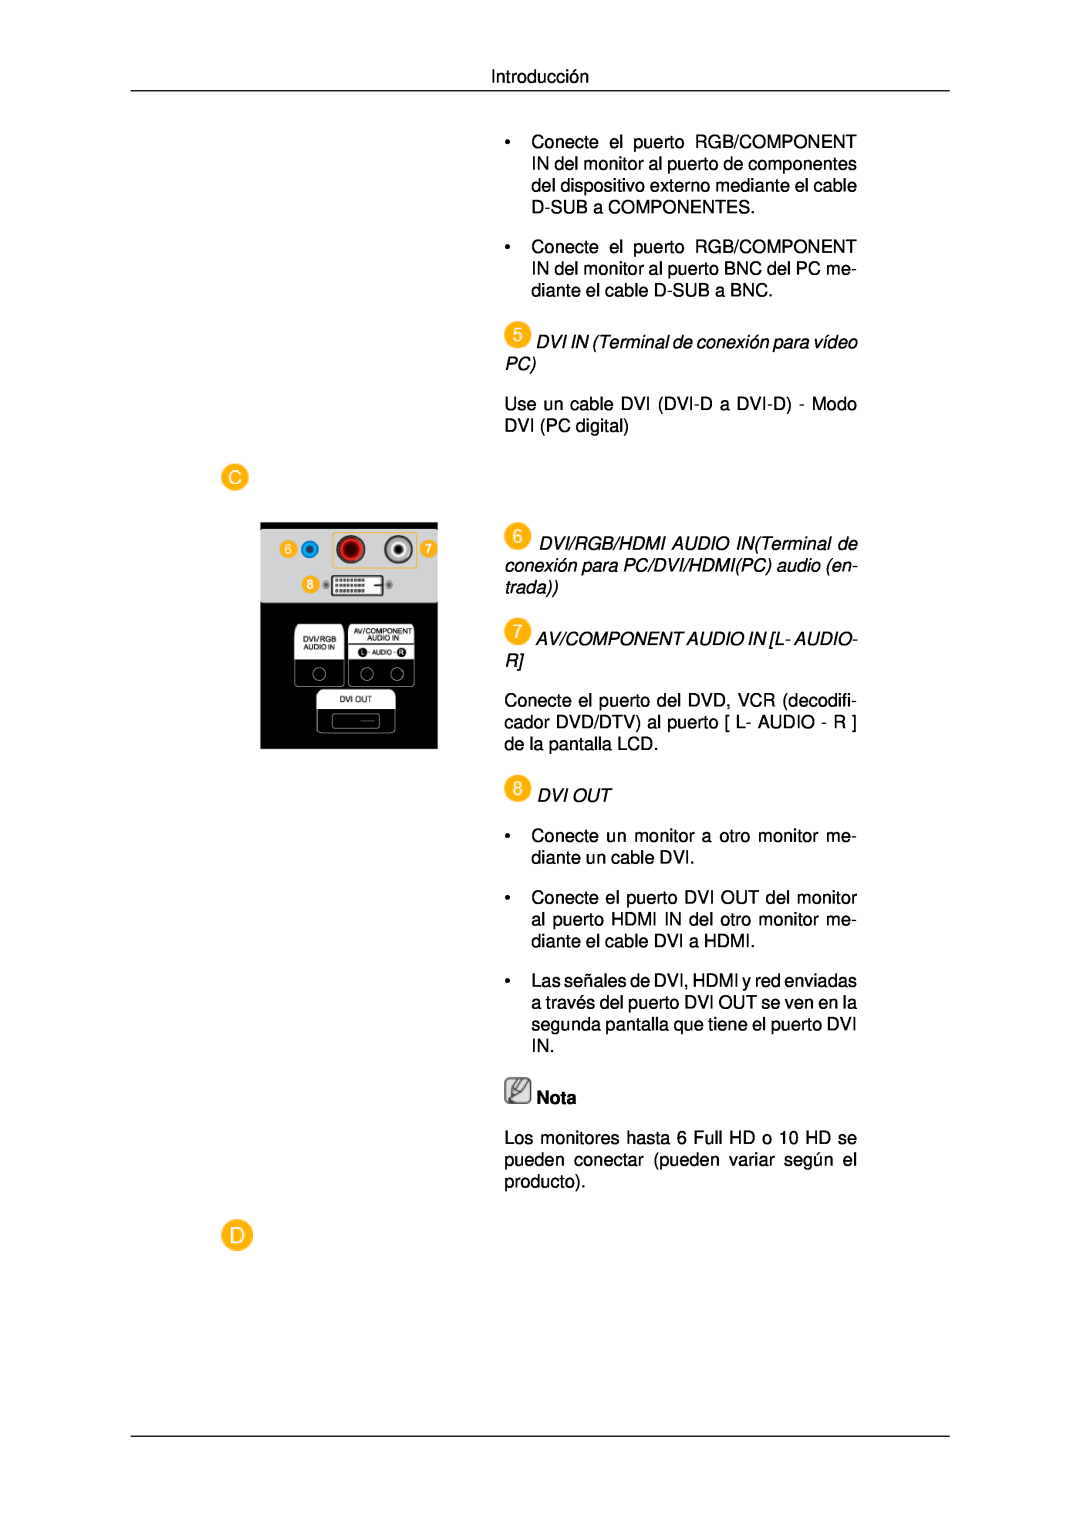 Samsung LH40MRTLBC/EN manual DVI IN Terminal de conexión para vídeo PC, Av/Component Audio In L- Audio- R, Dvi Out, Nota 